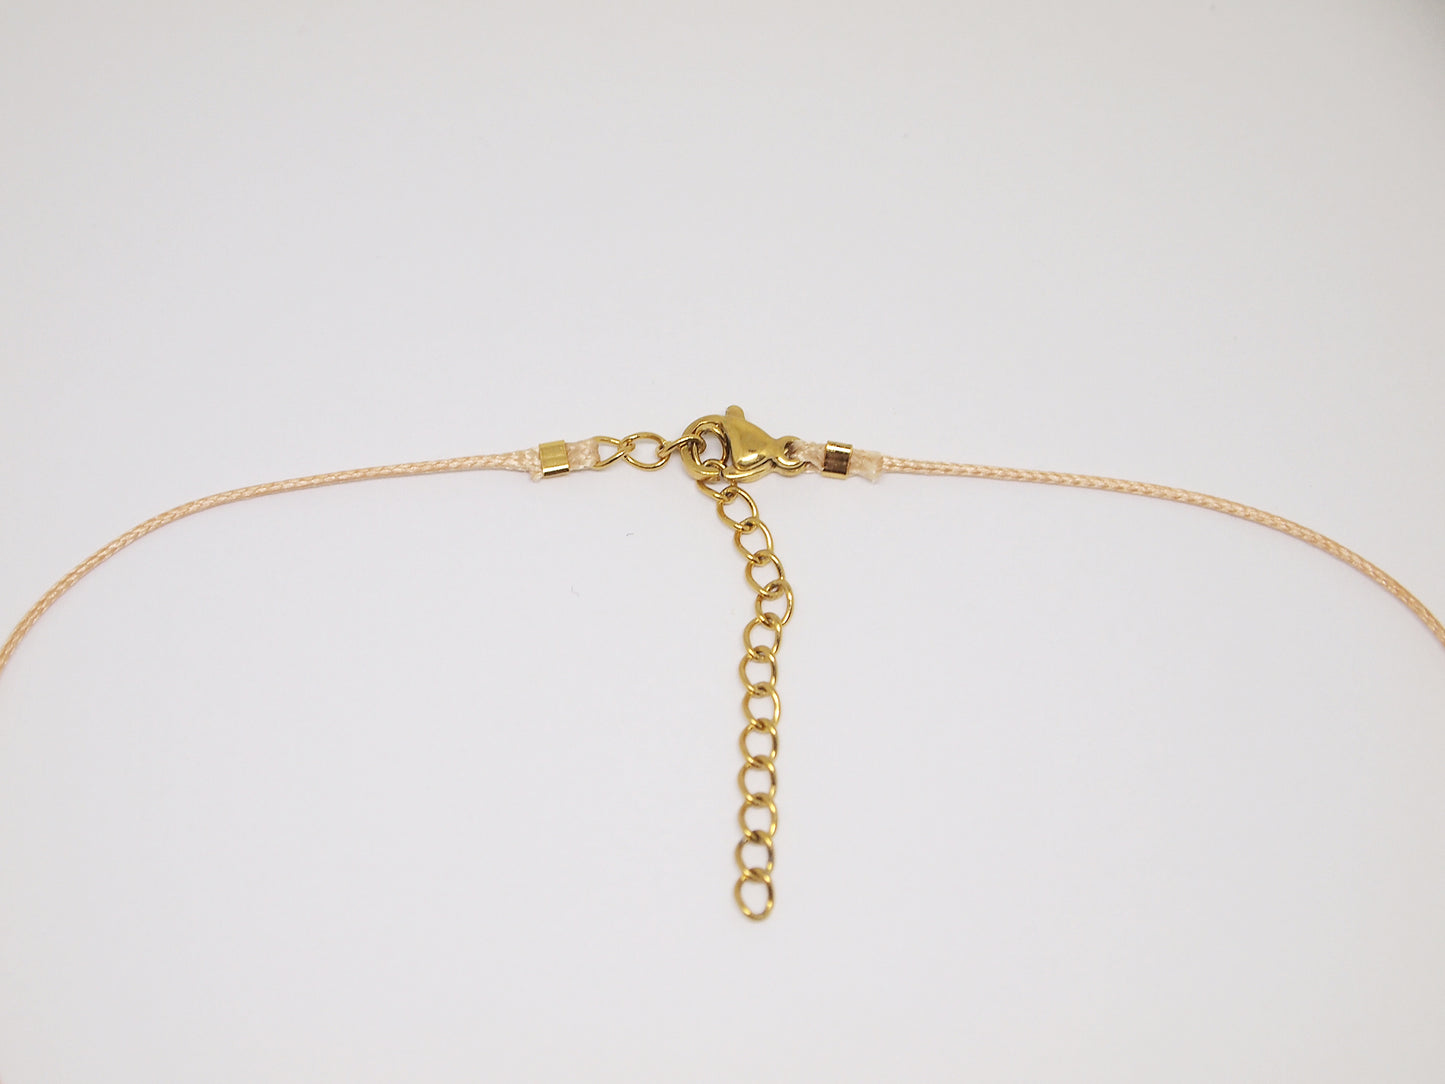 Lapis lazuli cord necklace